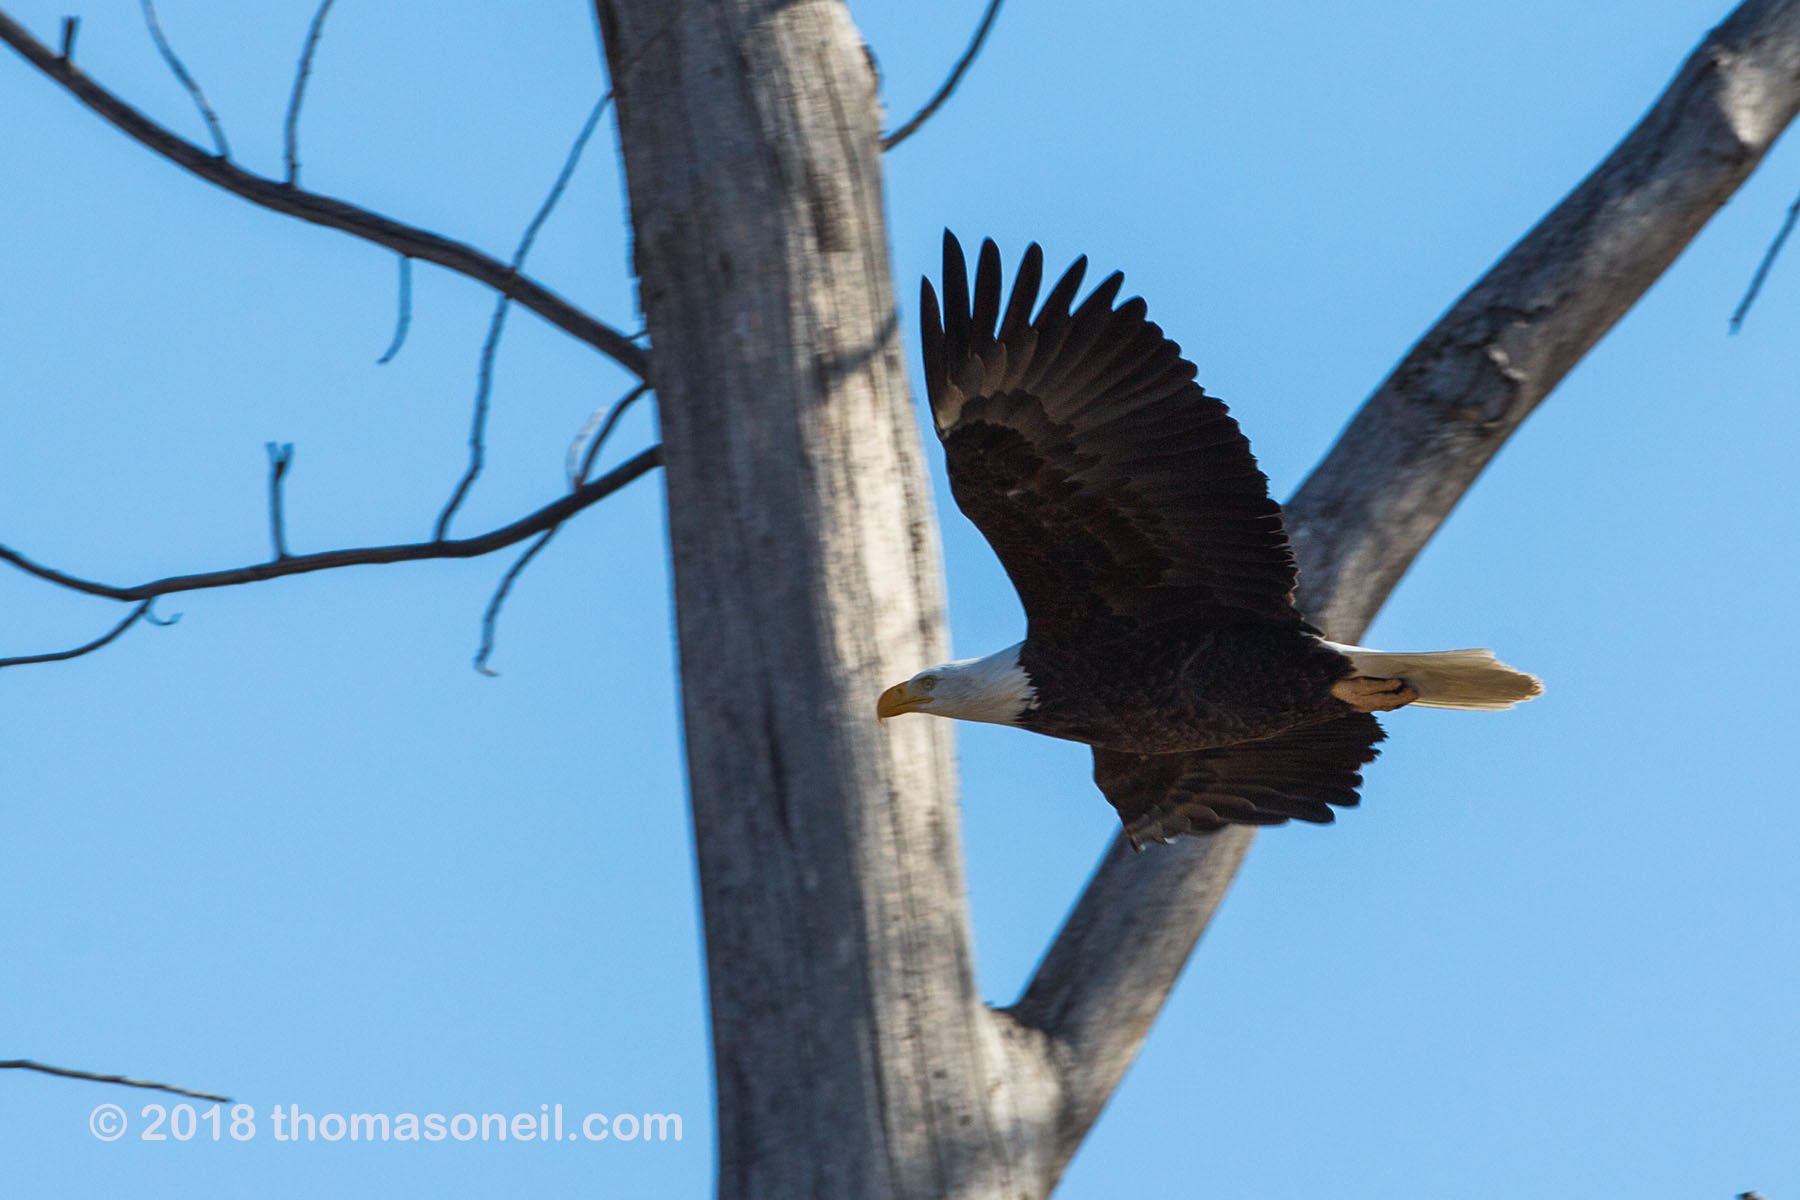 Bald eagle leaves the nest, Loess Bluffs National Wildlife Refuge, Missouri, December 2018.  Click for next photo.